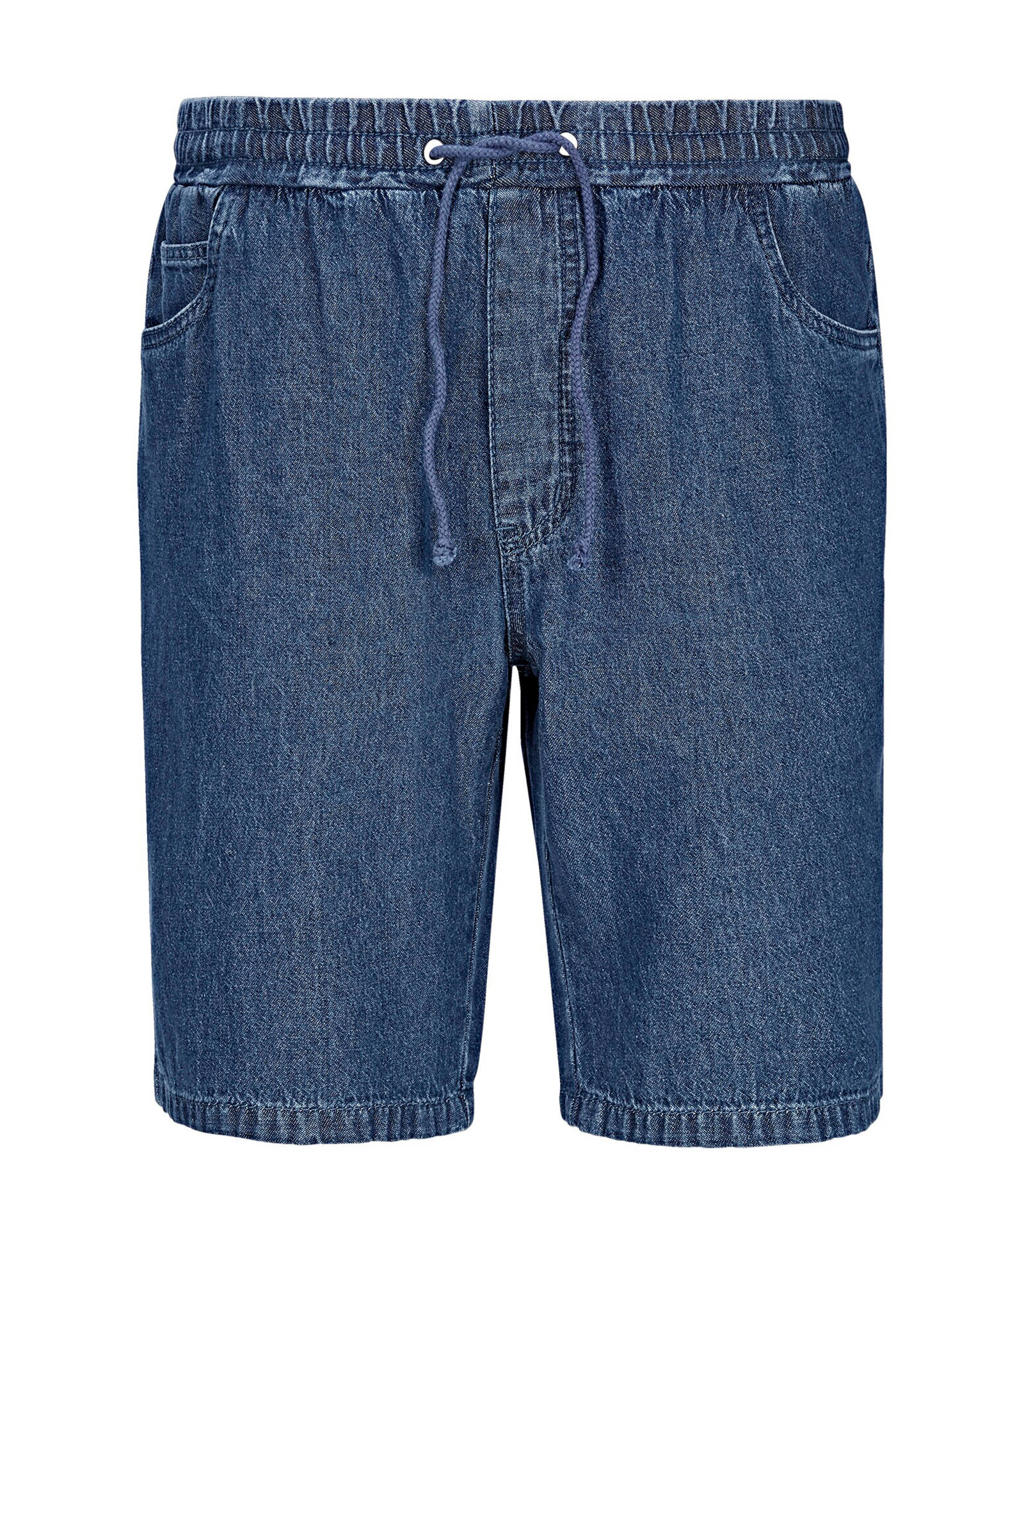 Jan Vanderstorm loose fit jeans short Plus Size FILEMON dark